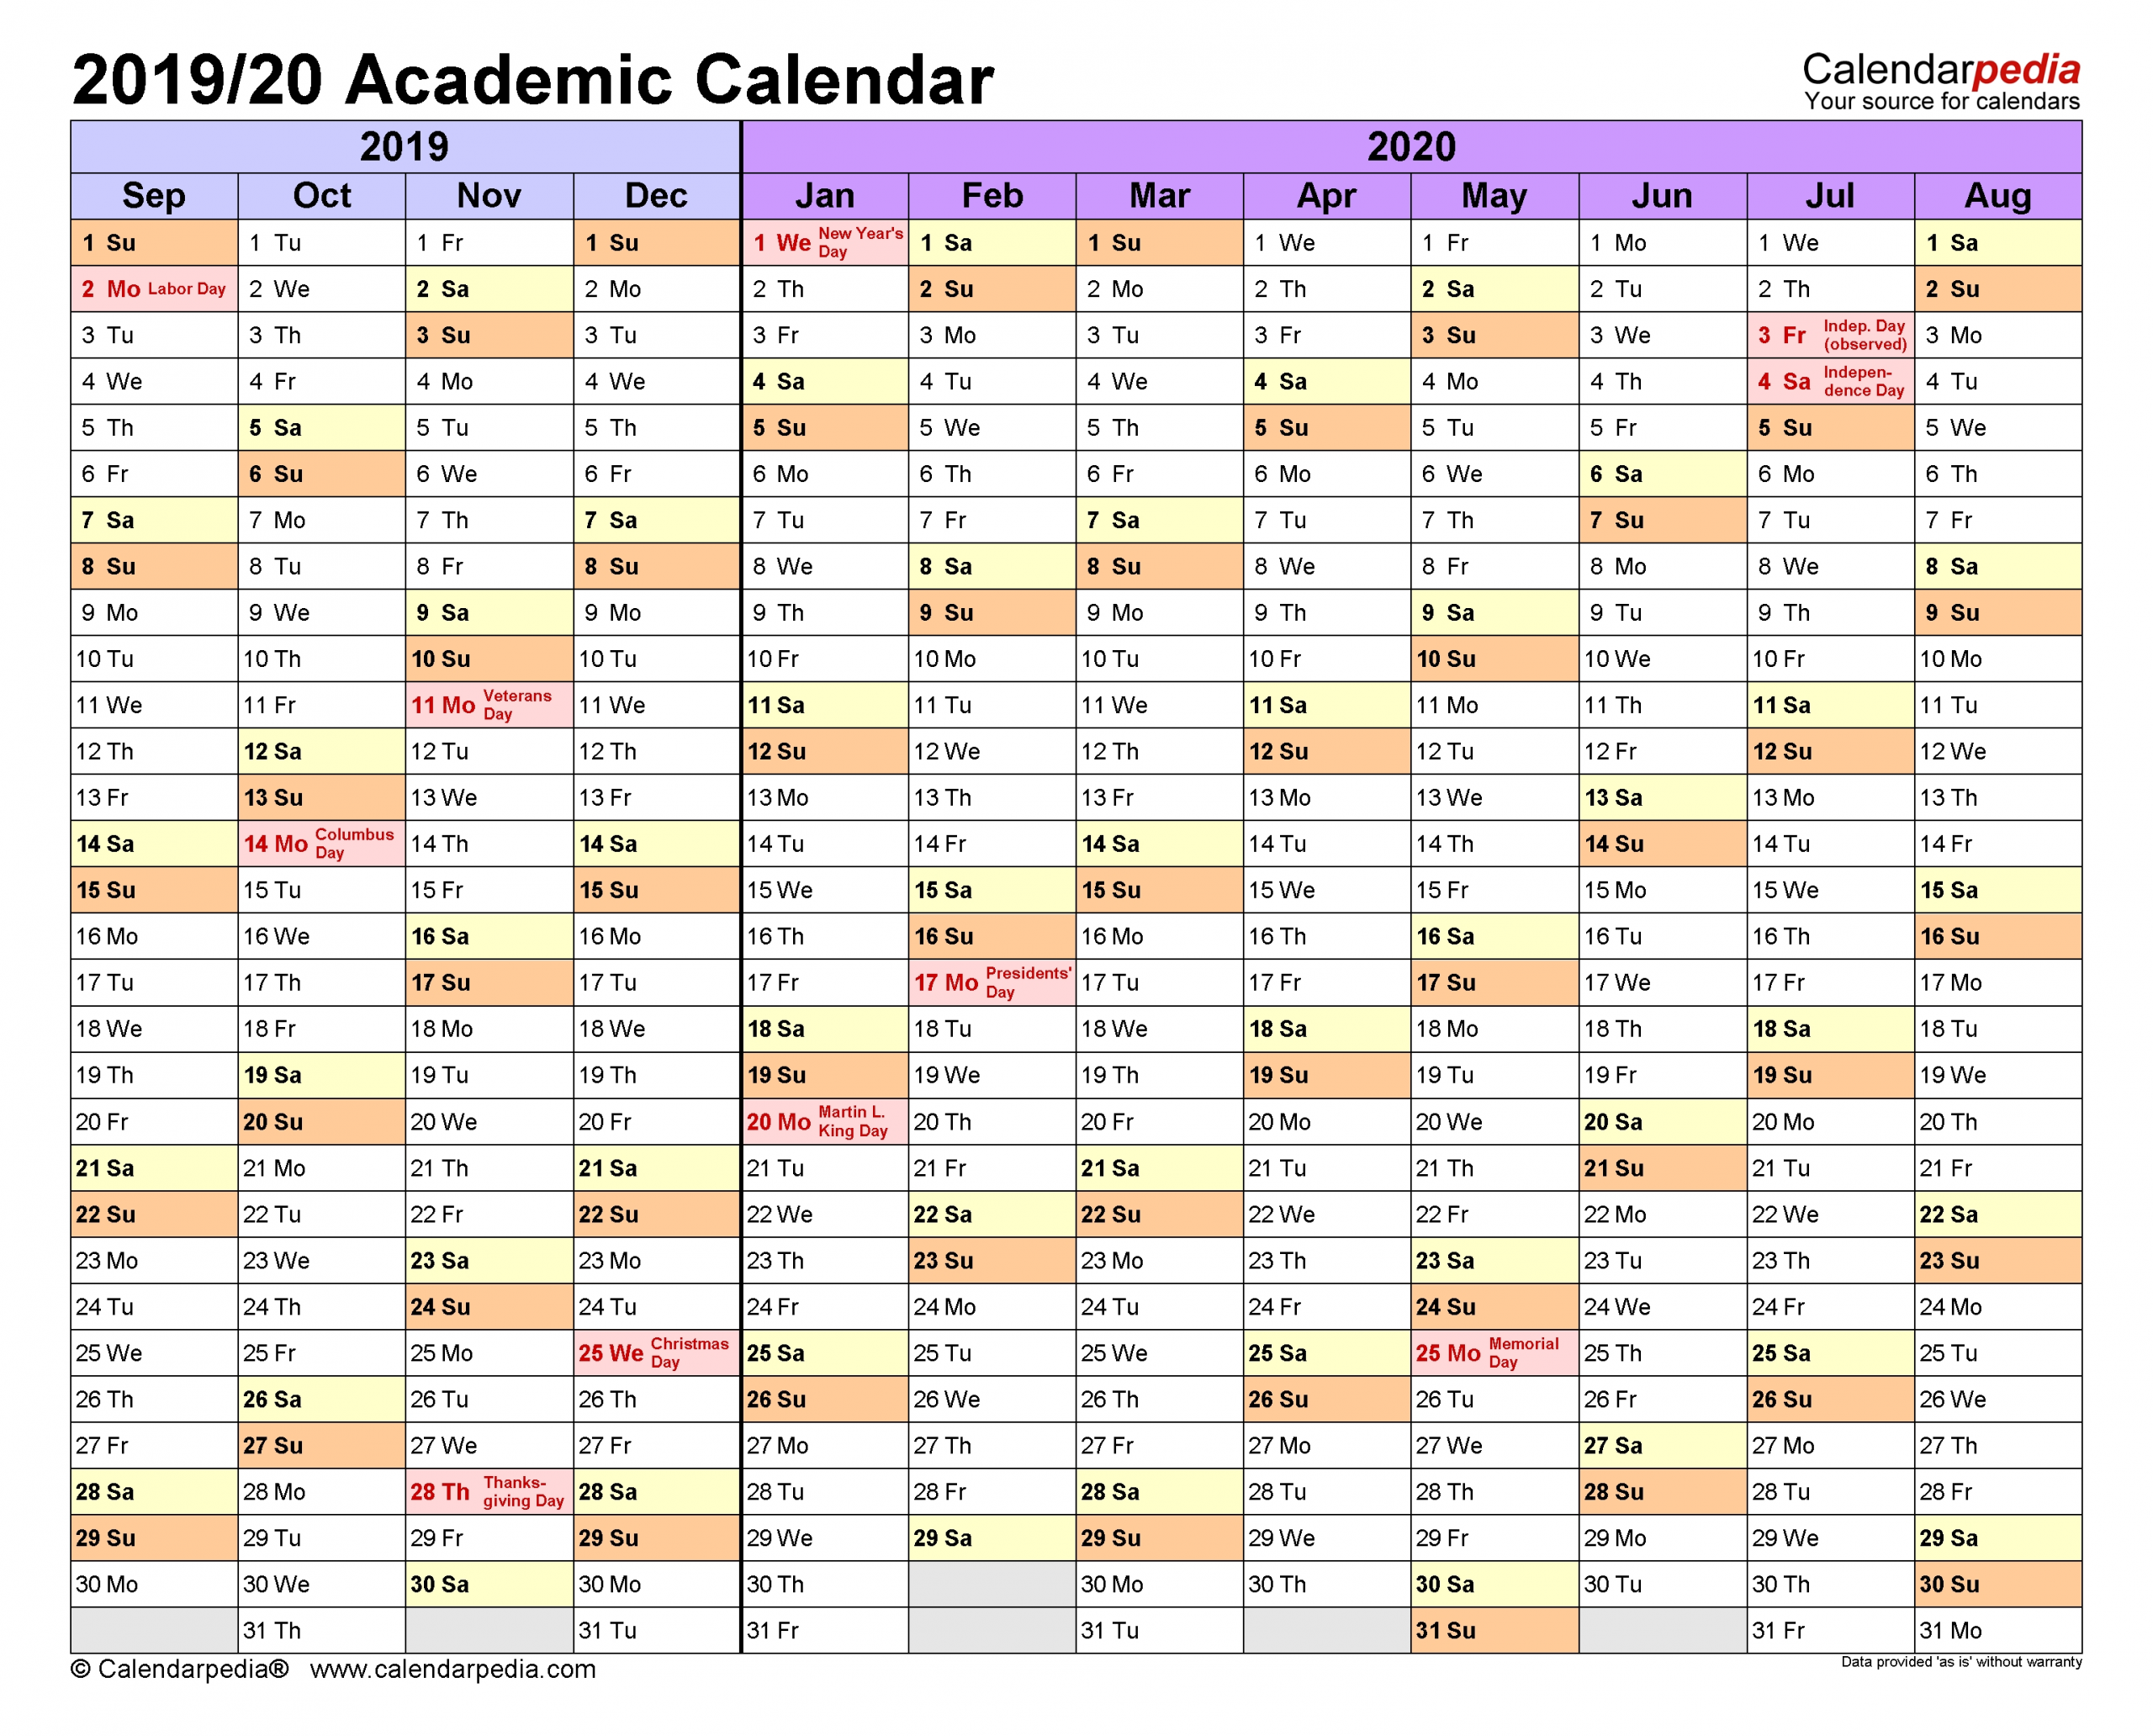 Academic Calendars 2019/2020 - Free Printable Word Templates